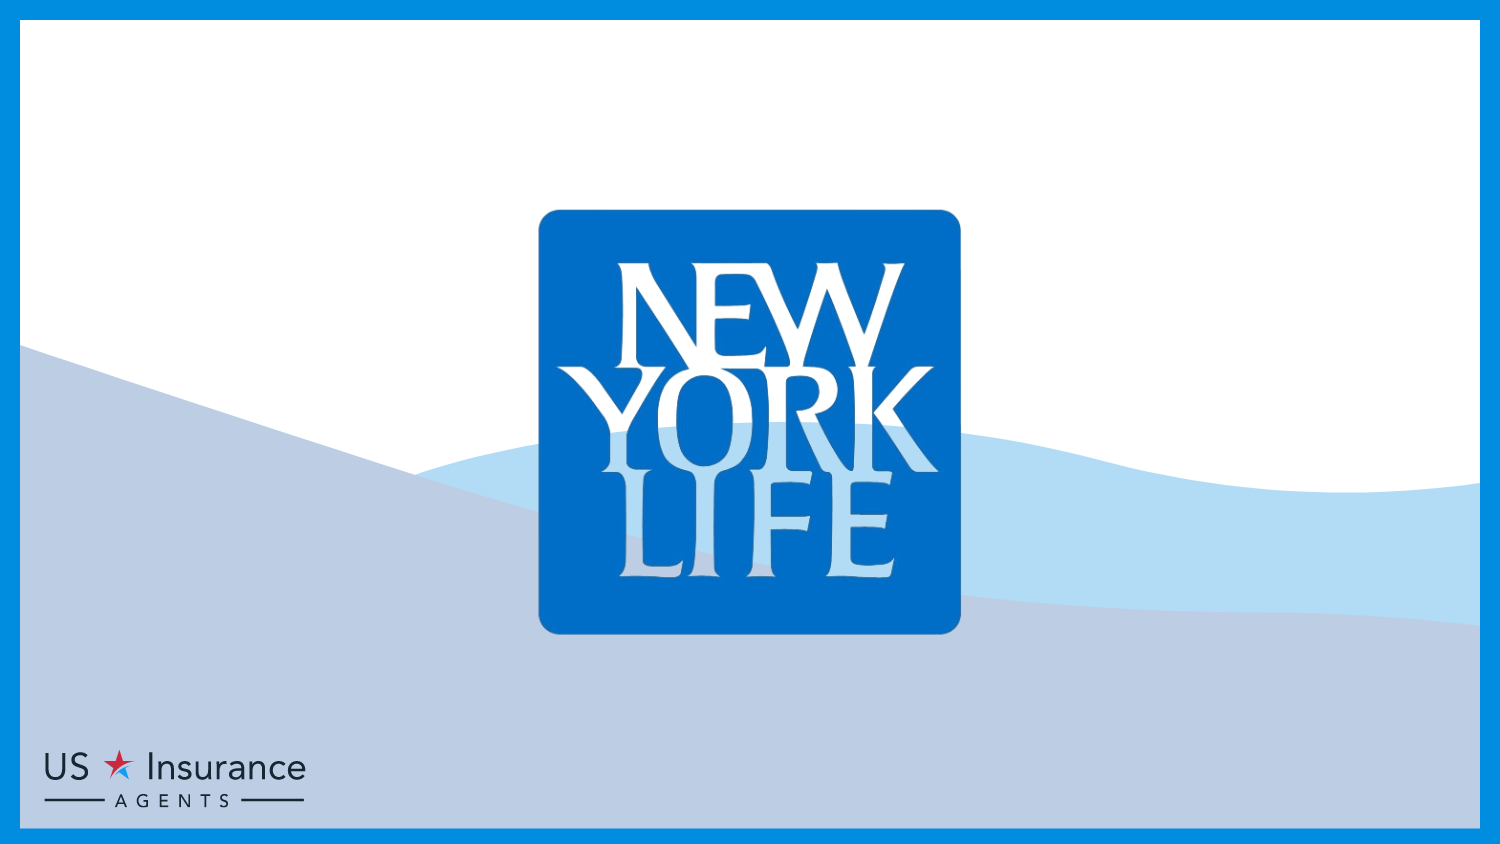 New York Life: Best Life Insurance for High-Net-Worth